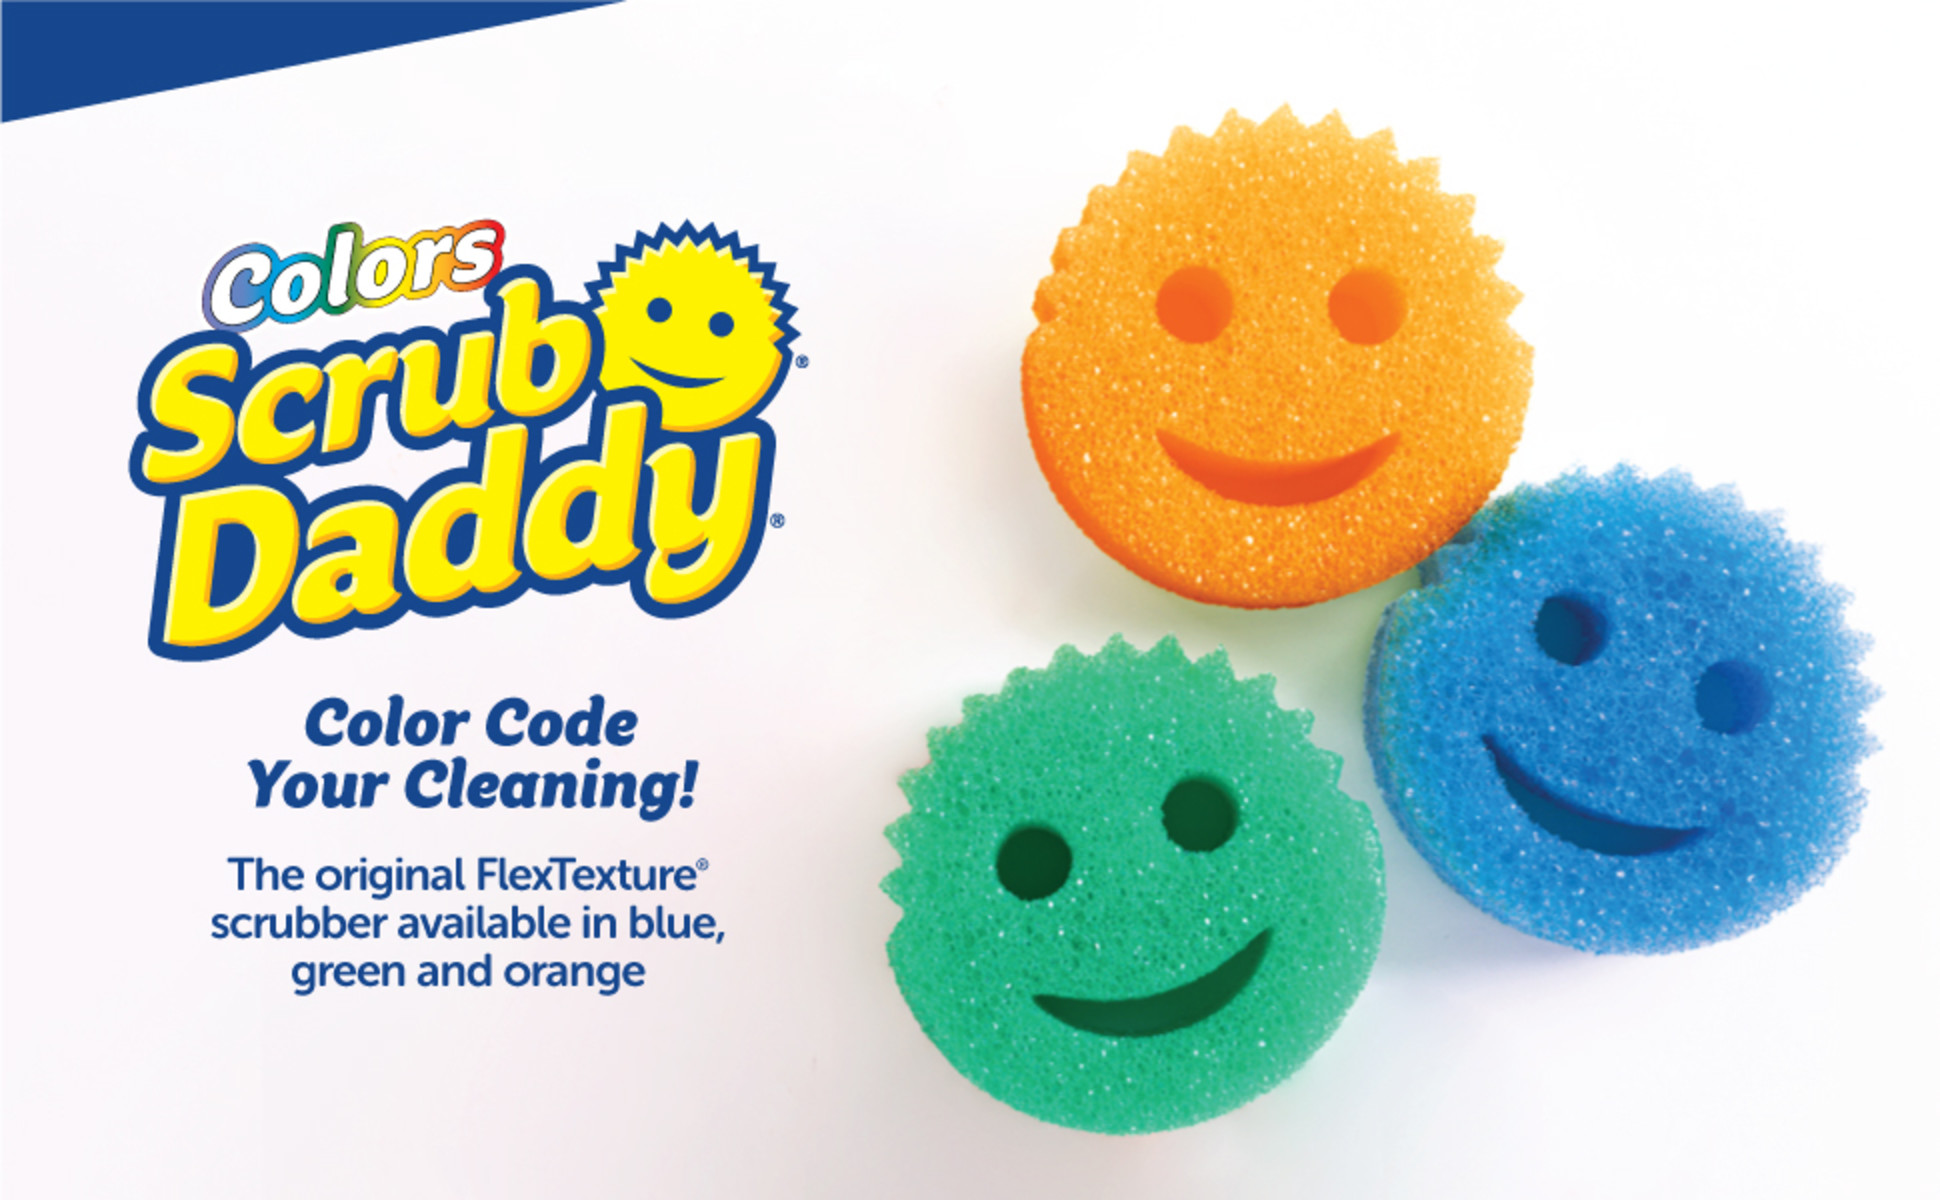 Scrub Daddy Flex Texture Scrubber Sponge SDC3PK 3-pack – Good's Store Online